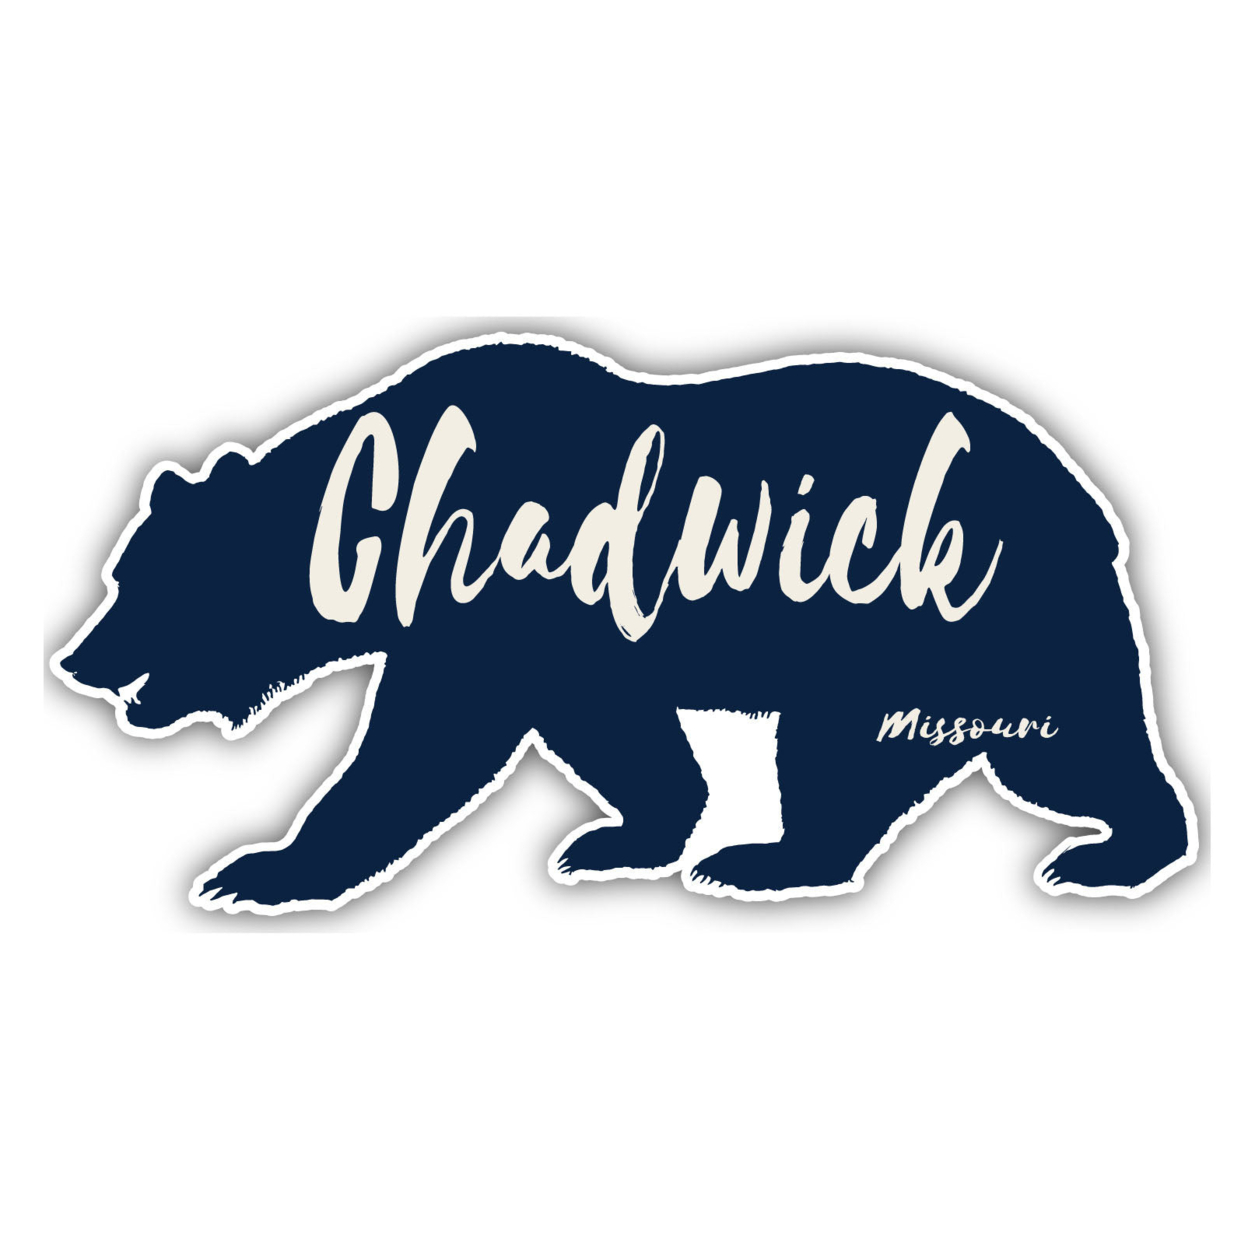 Chadwick Missouri Souvenir Decorative Stickers (Choose Theme And Size) - 4-Pack, 4-Inch, Tent